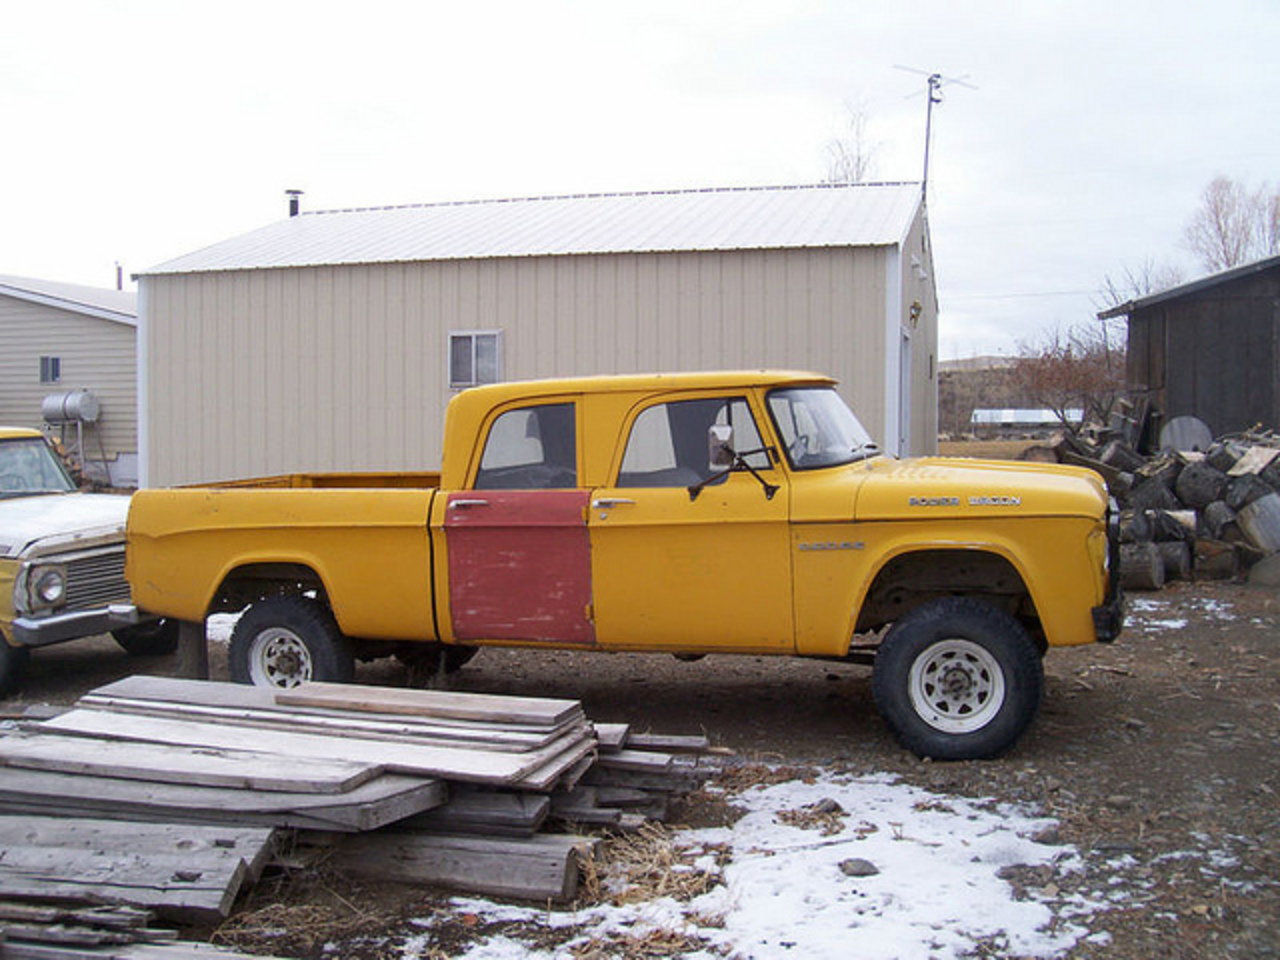 1962 Dodge Power wagon crew cab | Flickr - Photo Sharing!